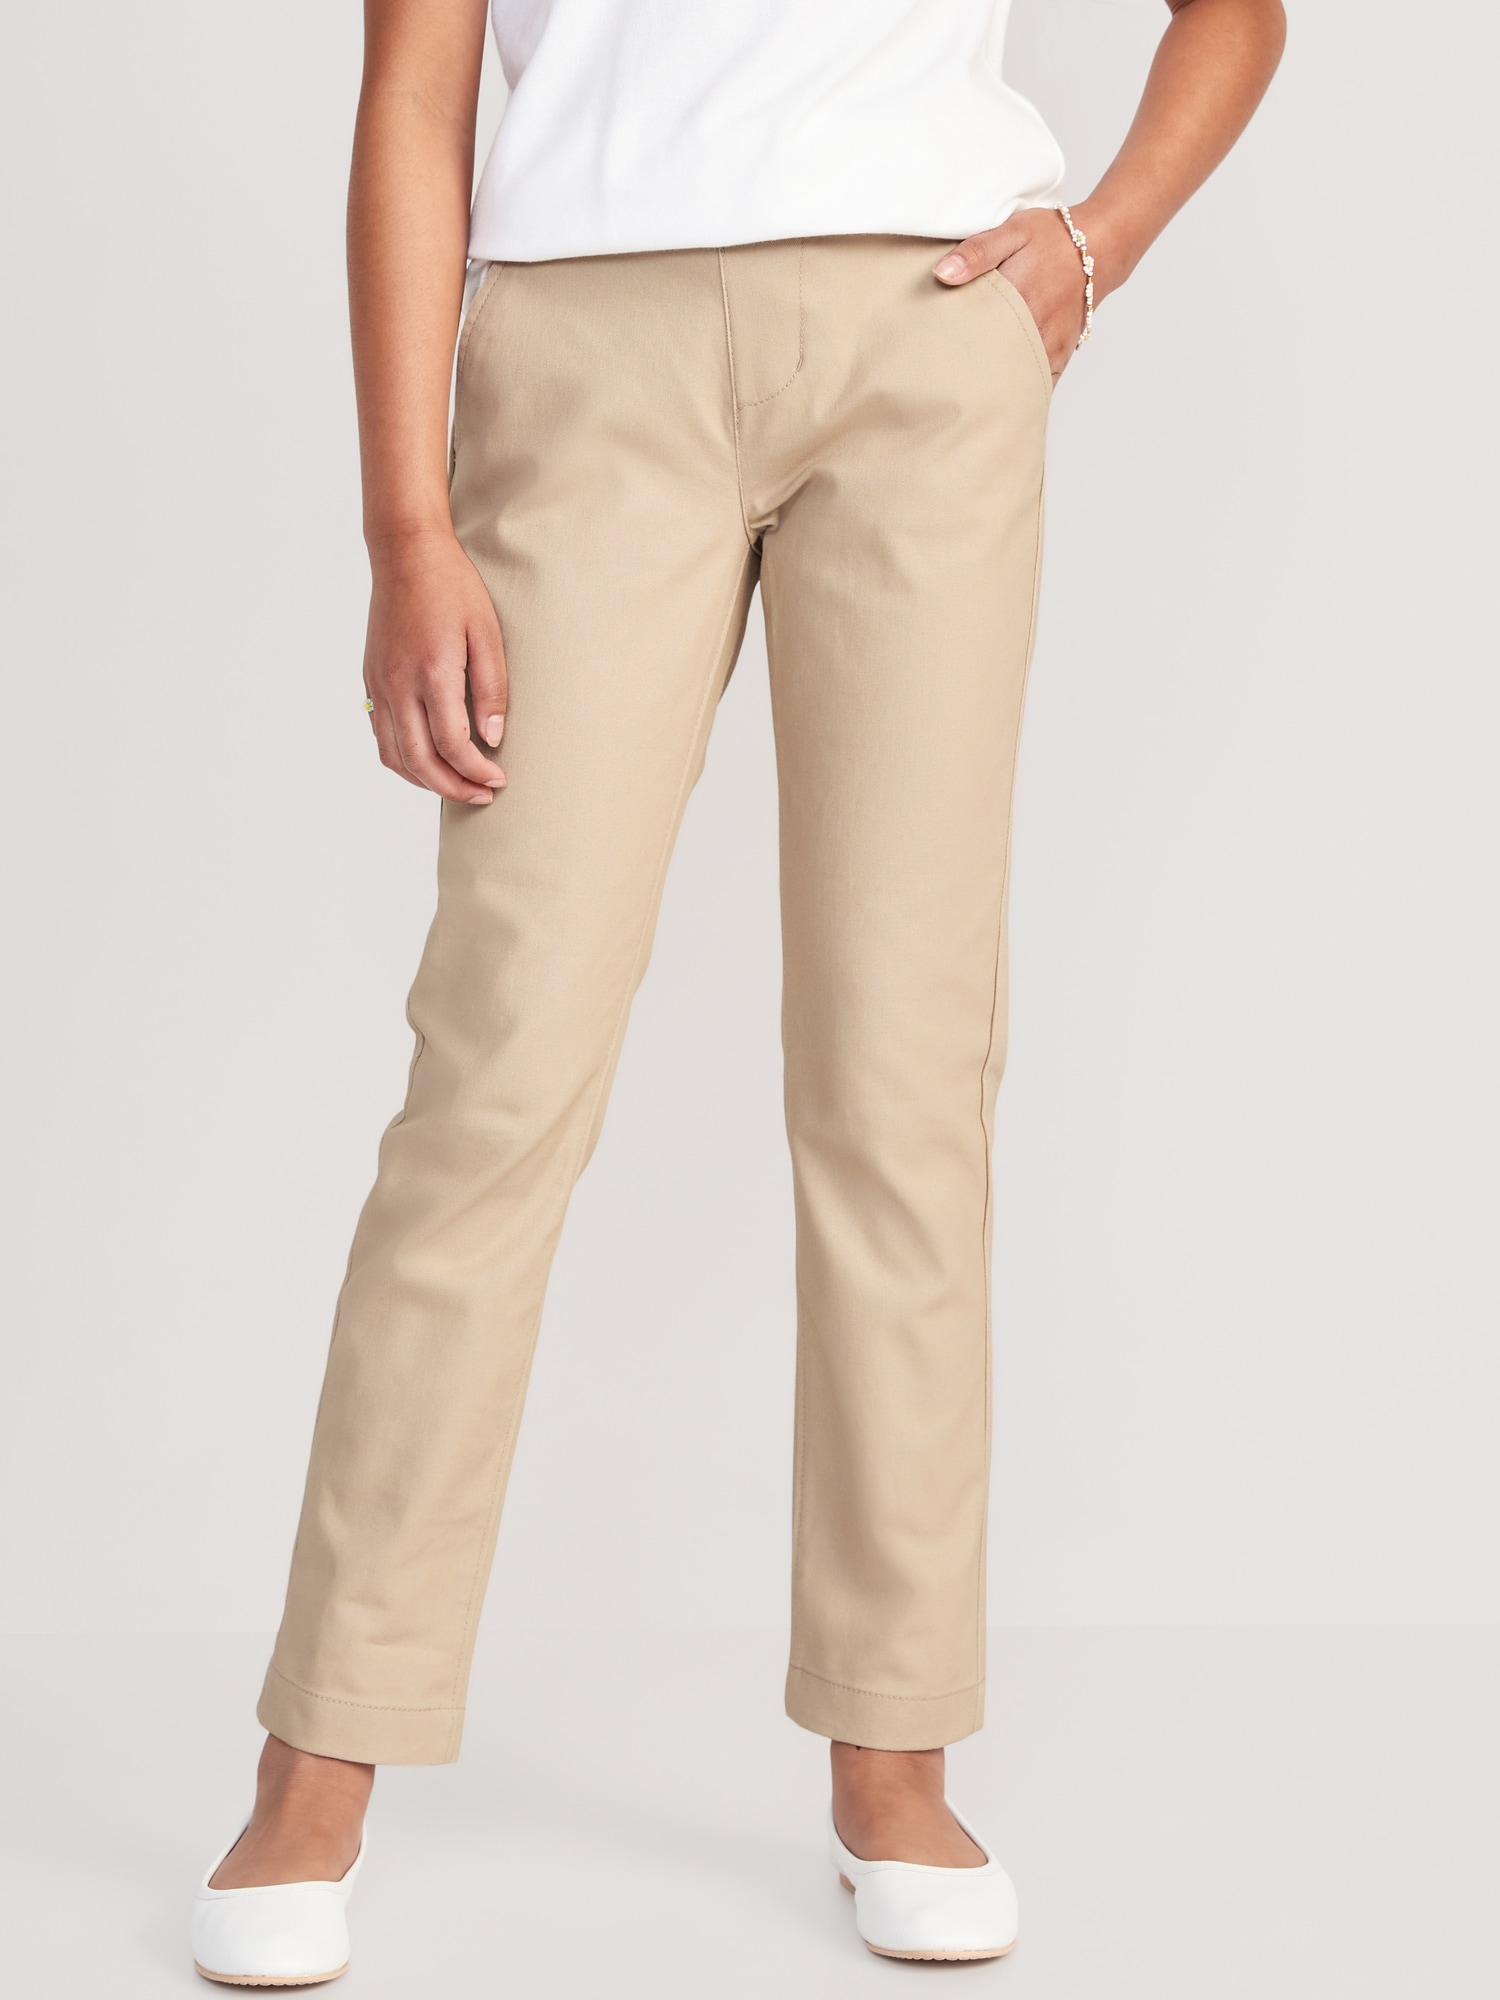 Khaki Skinny School Uniform Pants SXXXL  SohoGirlcom